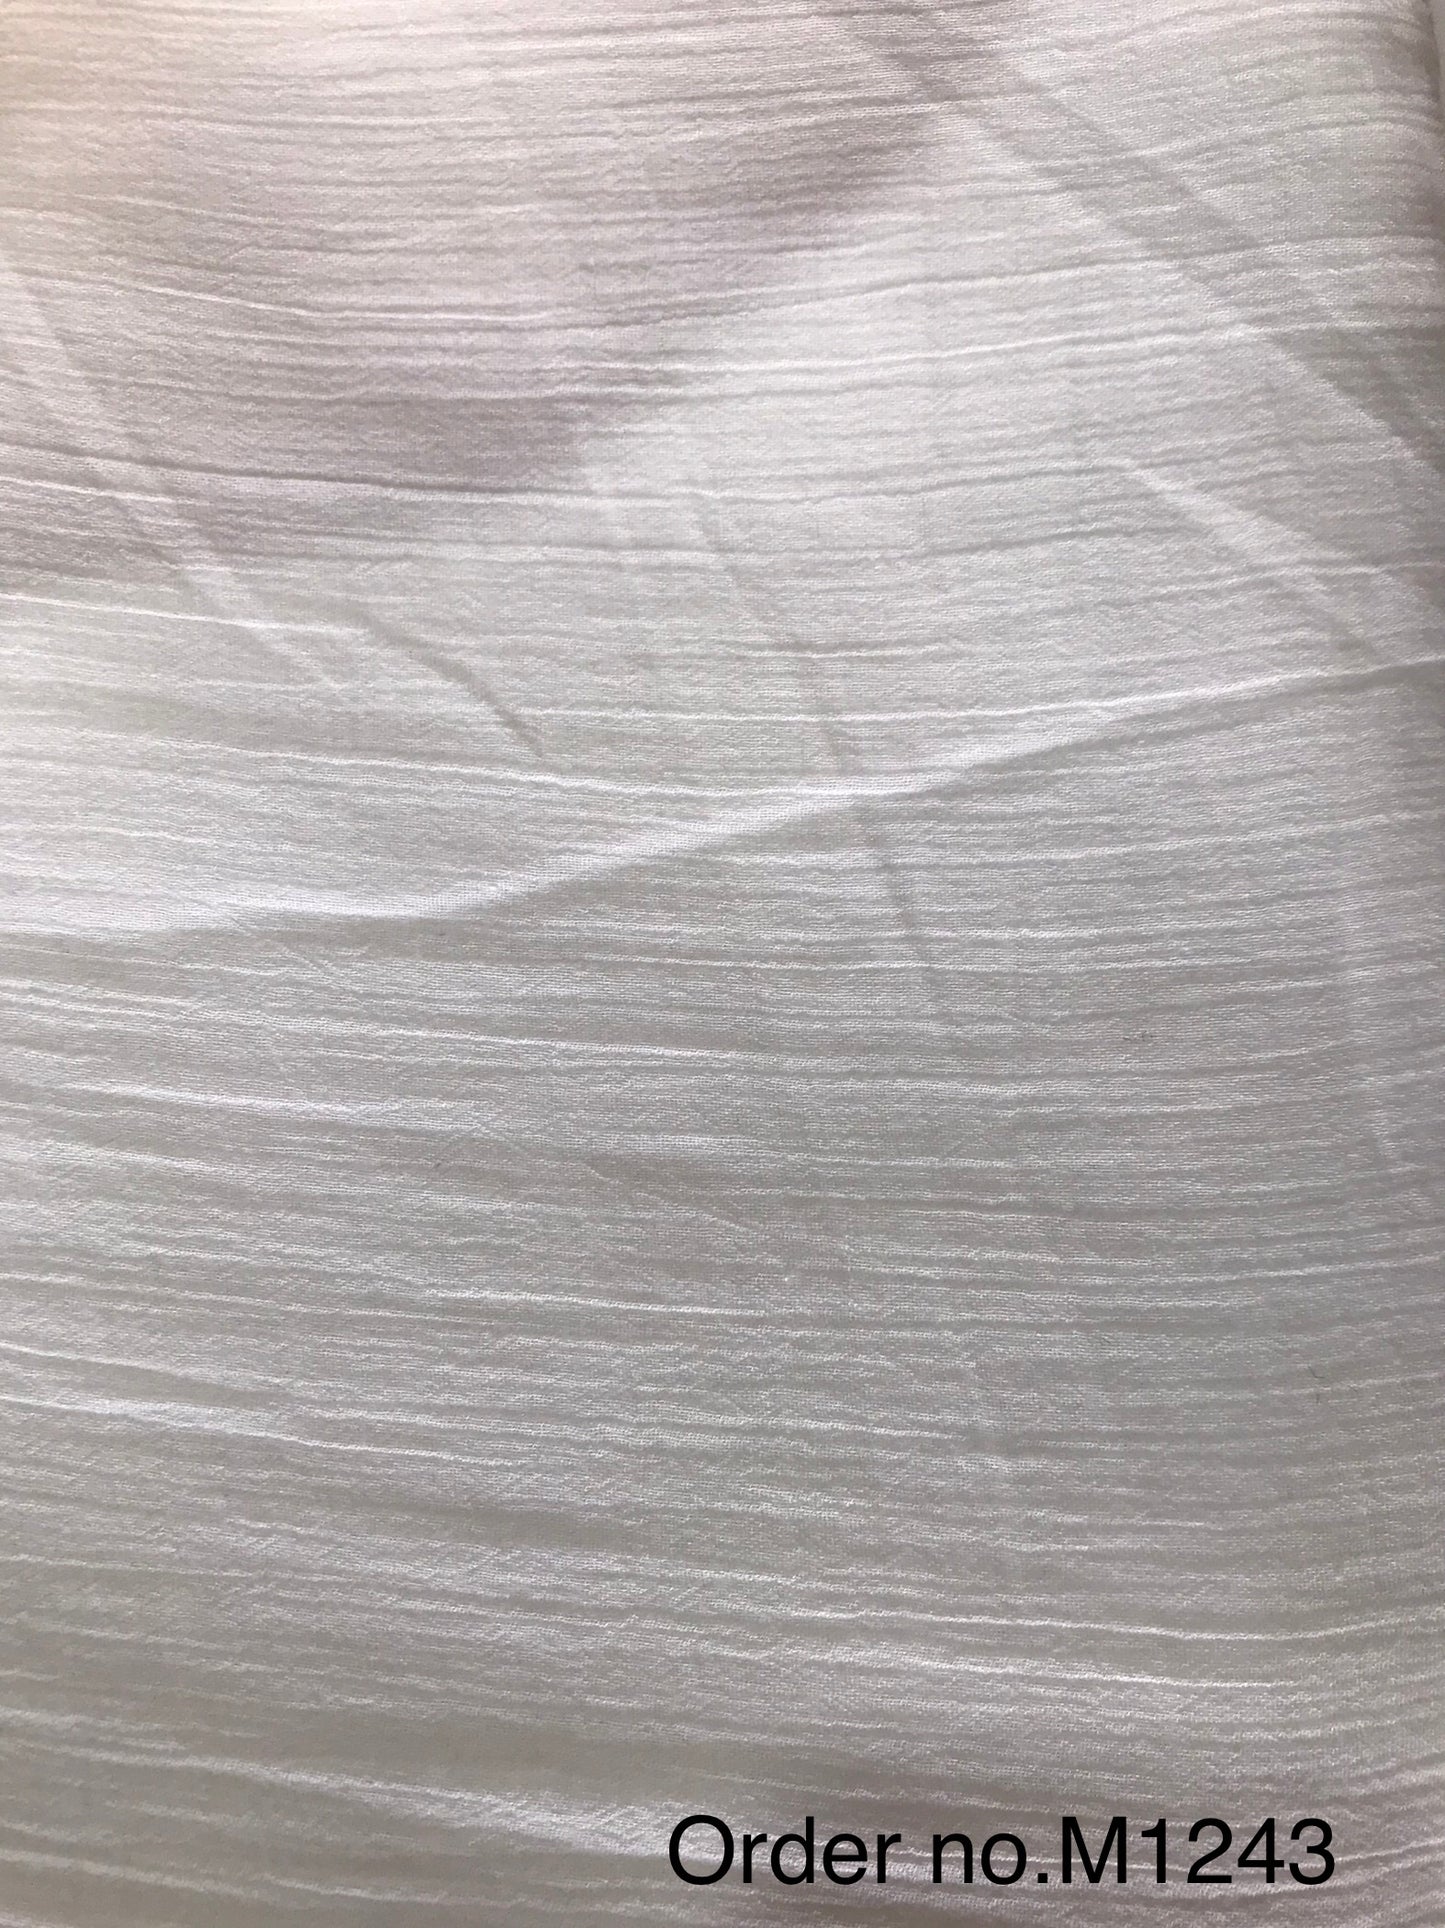 75gm wrinkle cotton